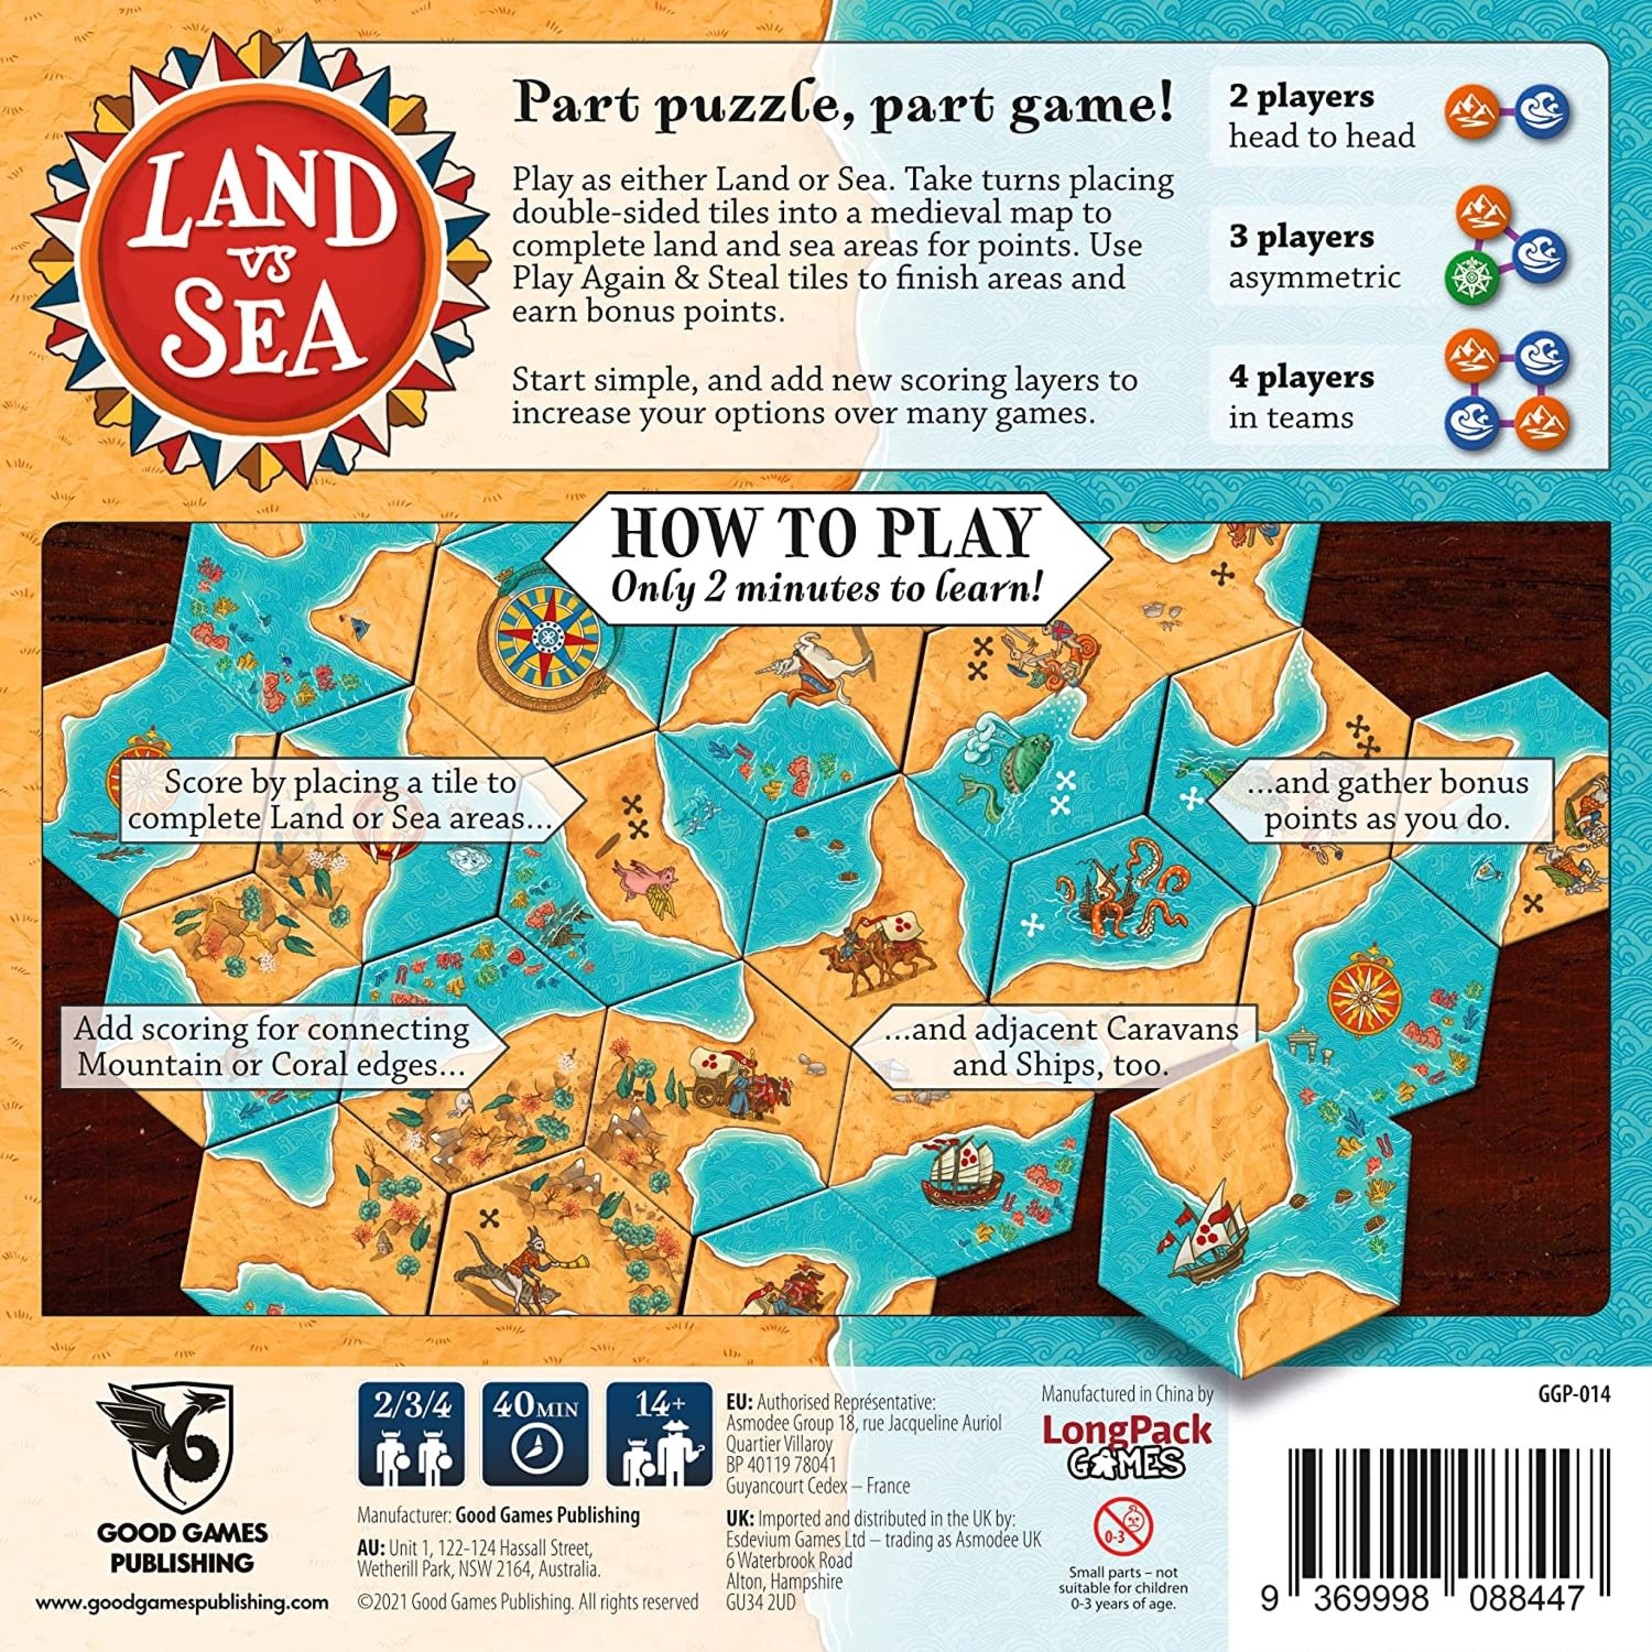 Good Games Publishing Land vs Sea